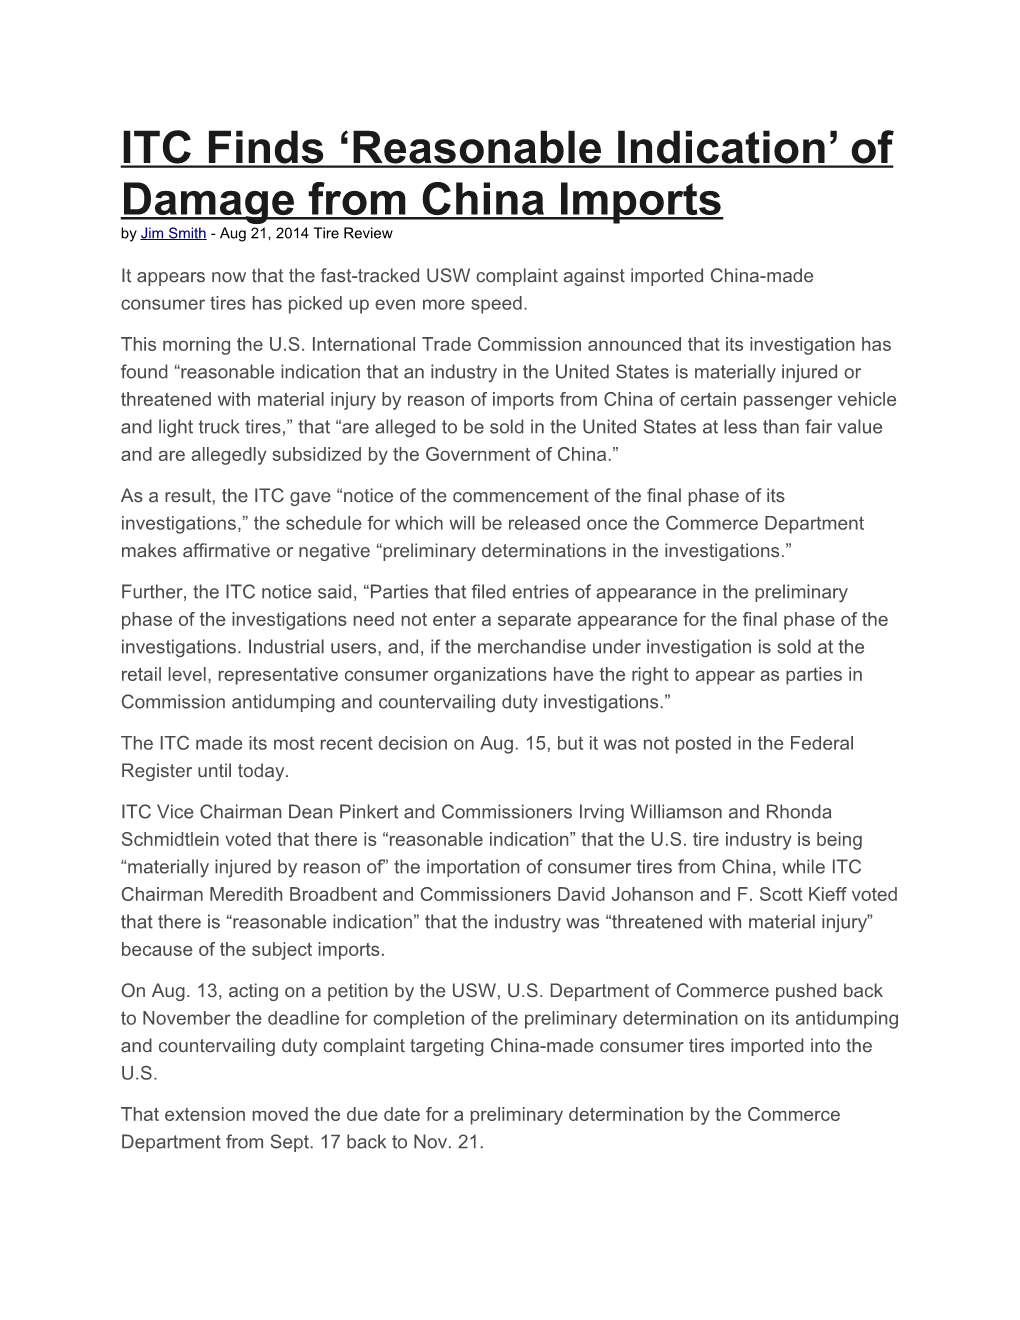 ITC Finds Reasonable Indication of Damage from China Imports